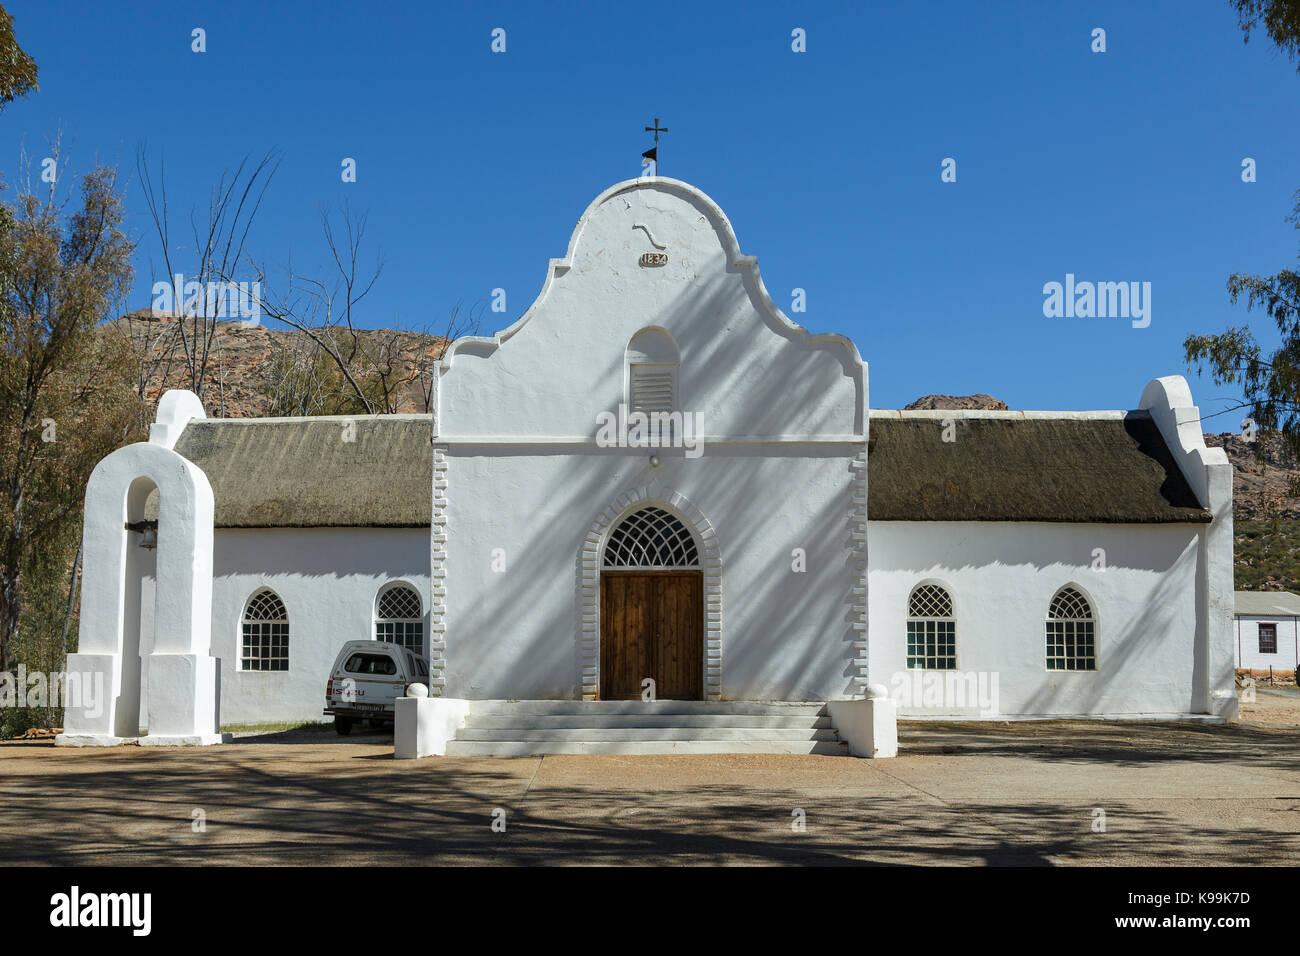 Wupperthal south africa -Fotos und -Bildmaterial in hoher Auflösung – Alamy